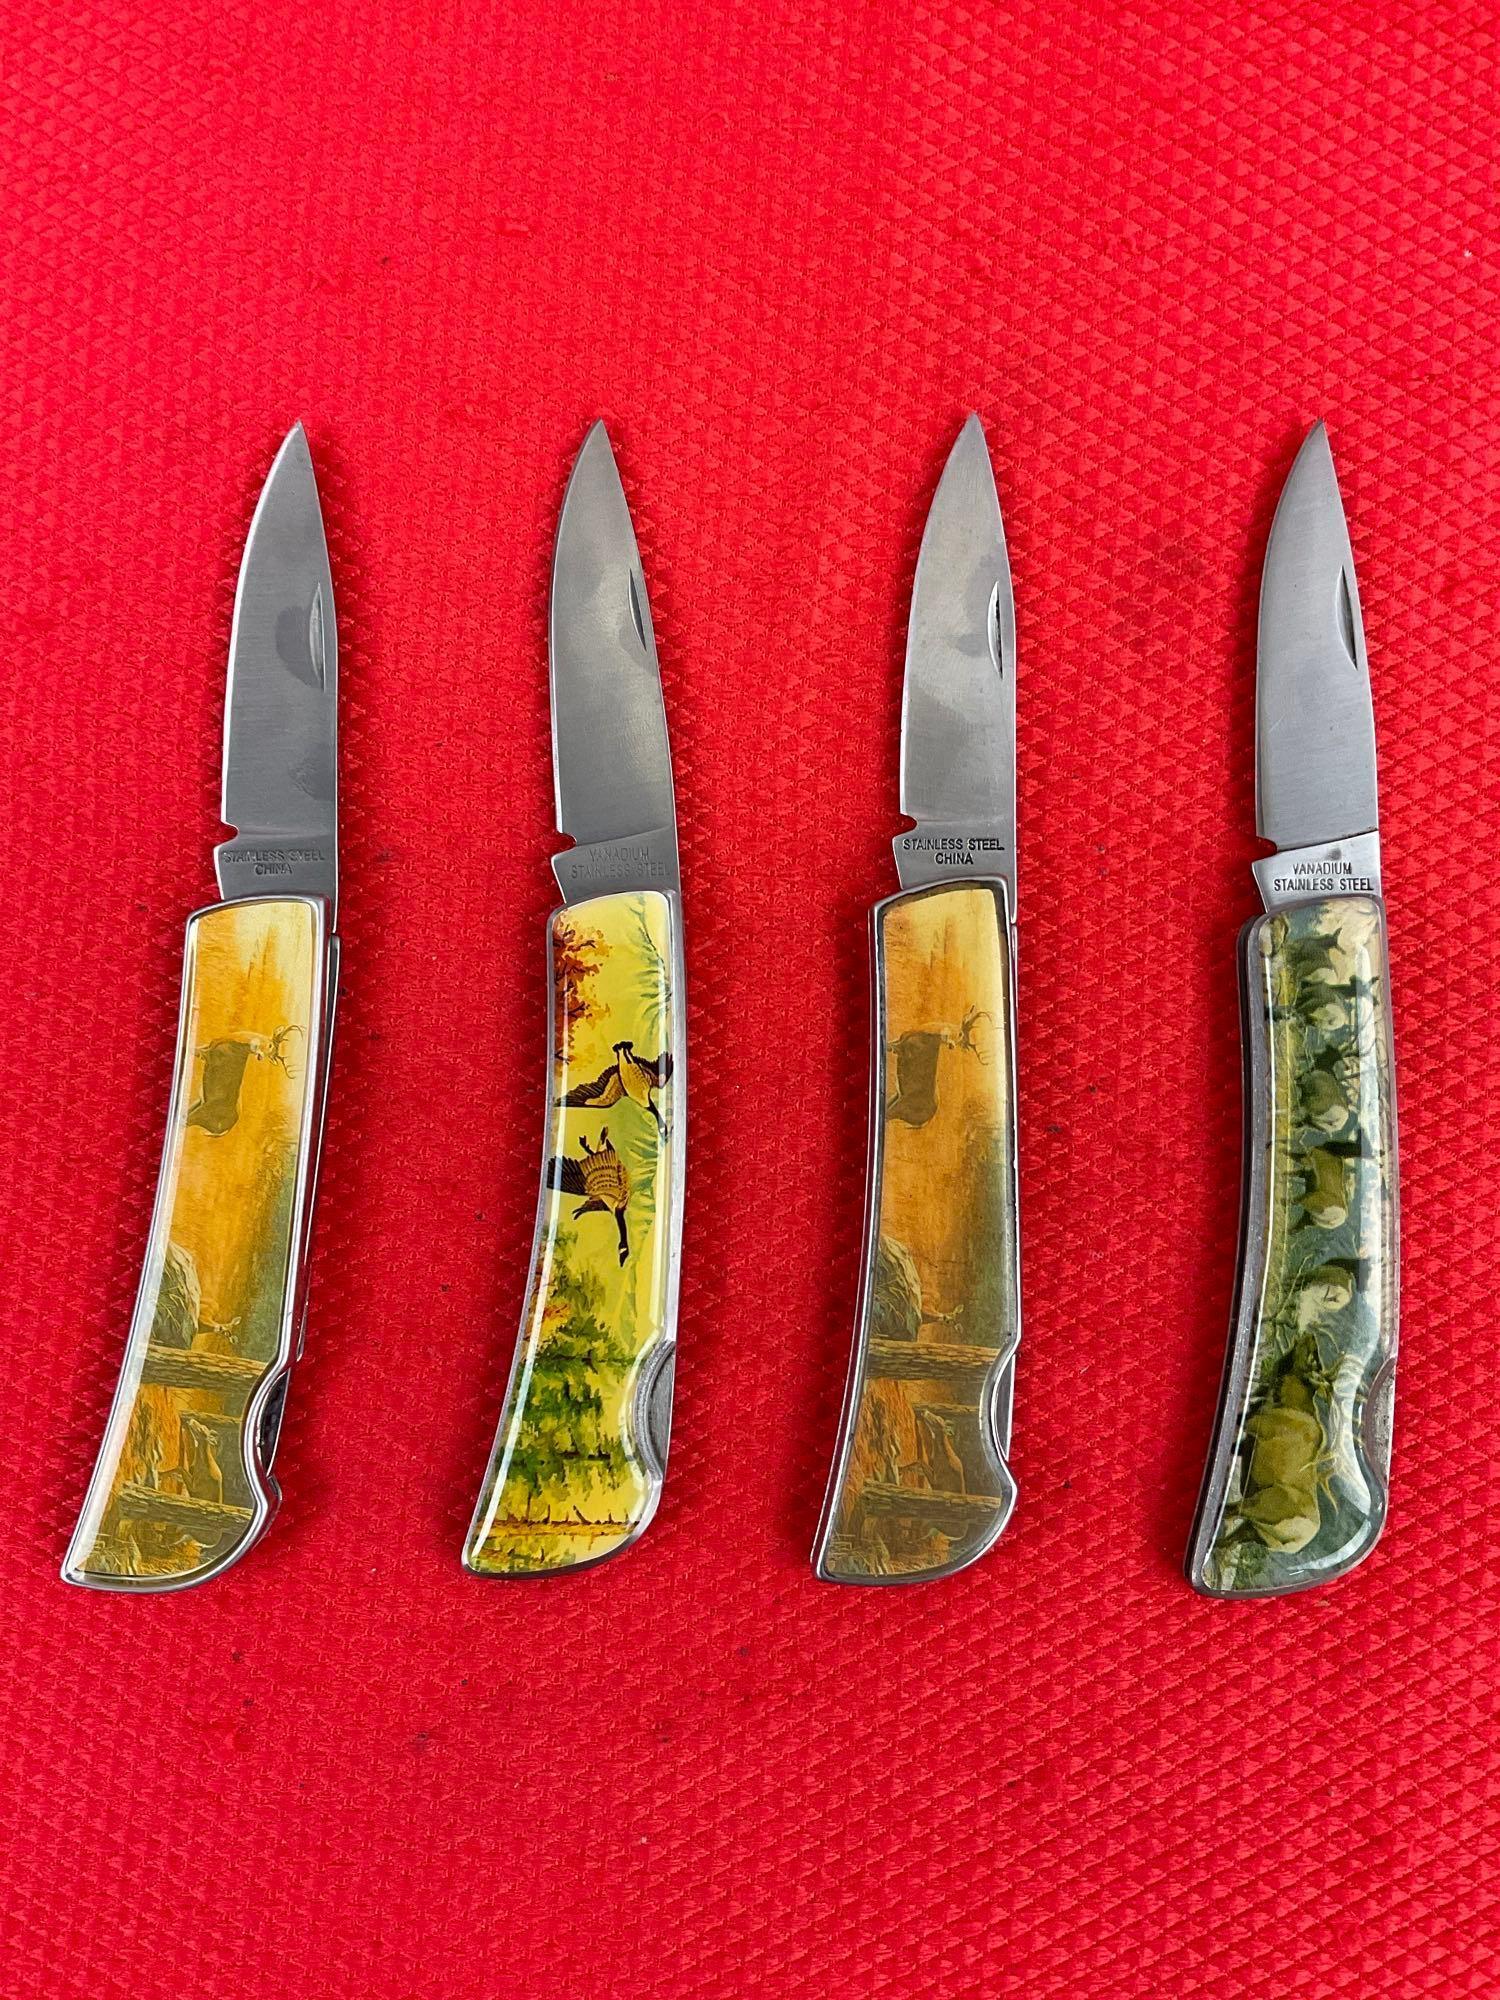 4 pcs 2.5" Vanadium Steel Folding Blade Pocket Knives w/ Decorated Handles & 3x Wooden Boxes. See